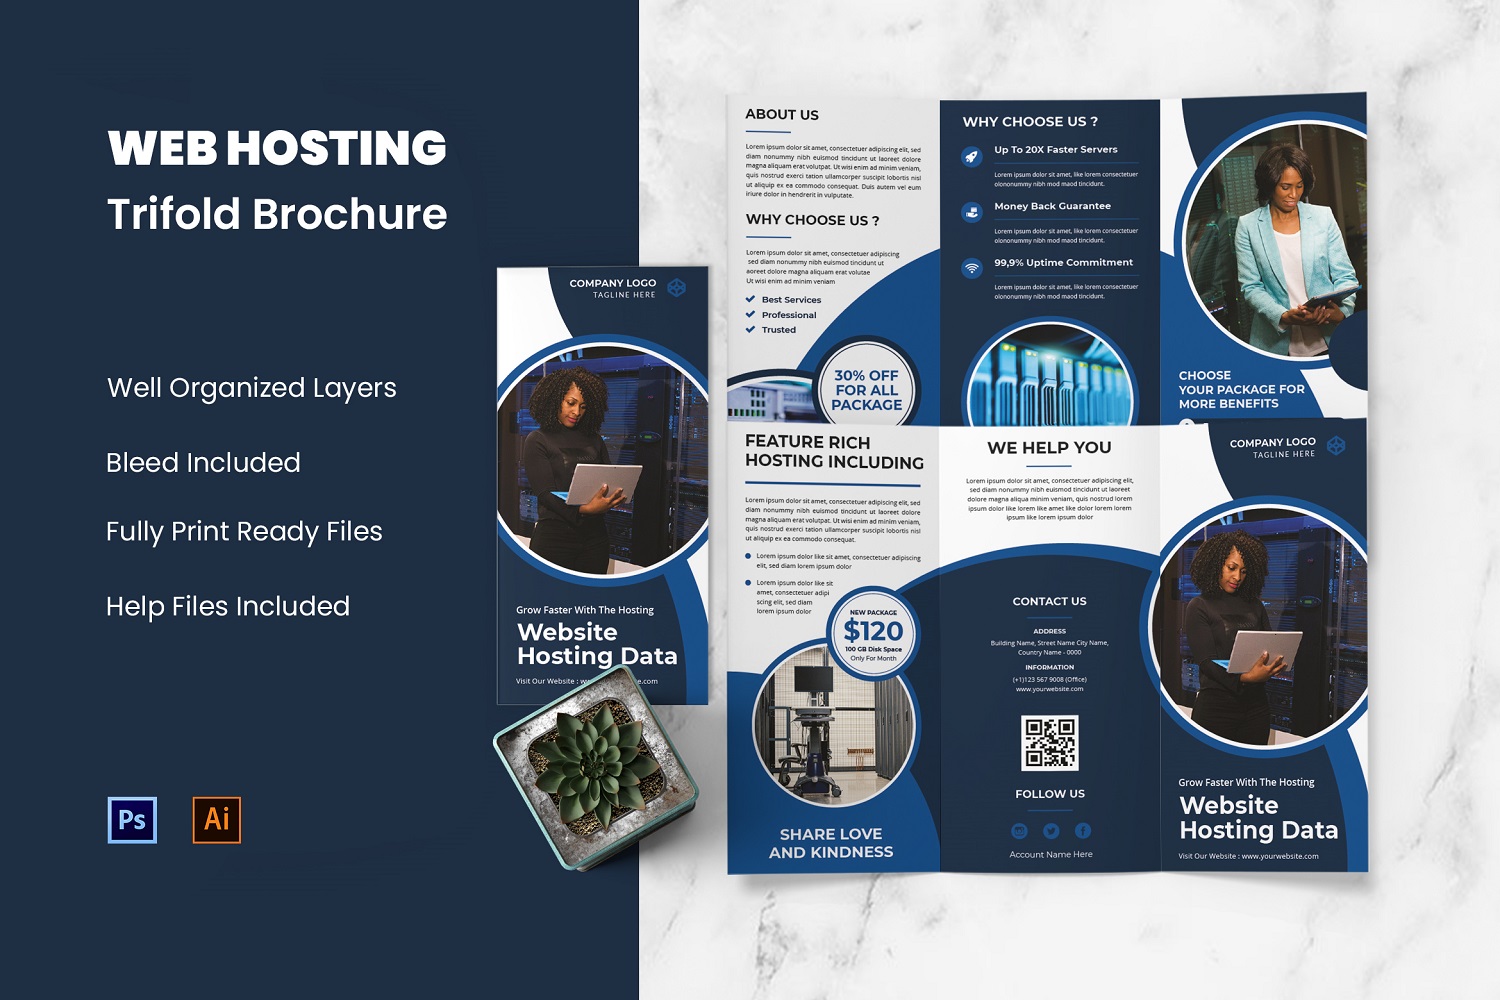 Web Hosting Trifold Brochure